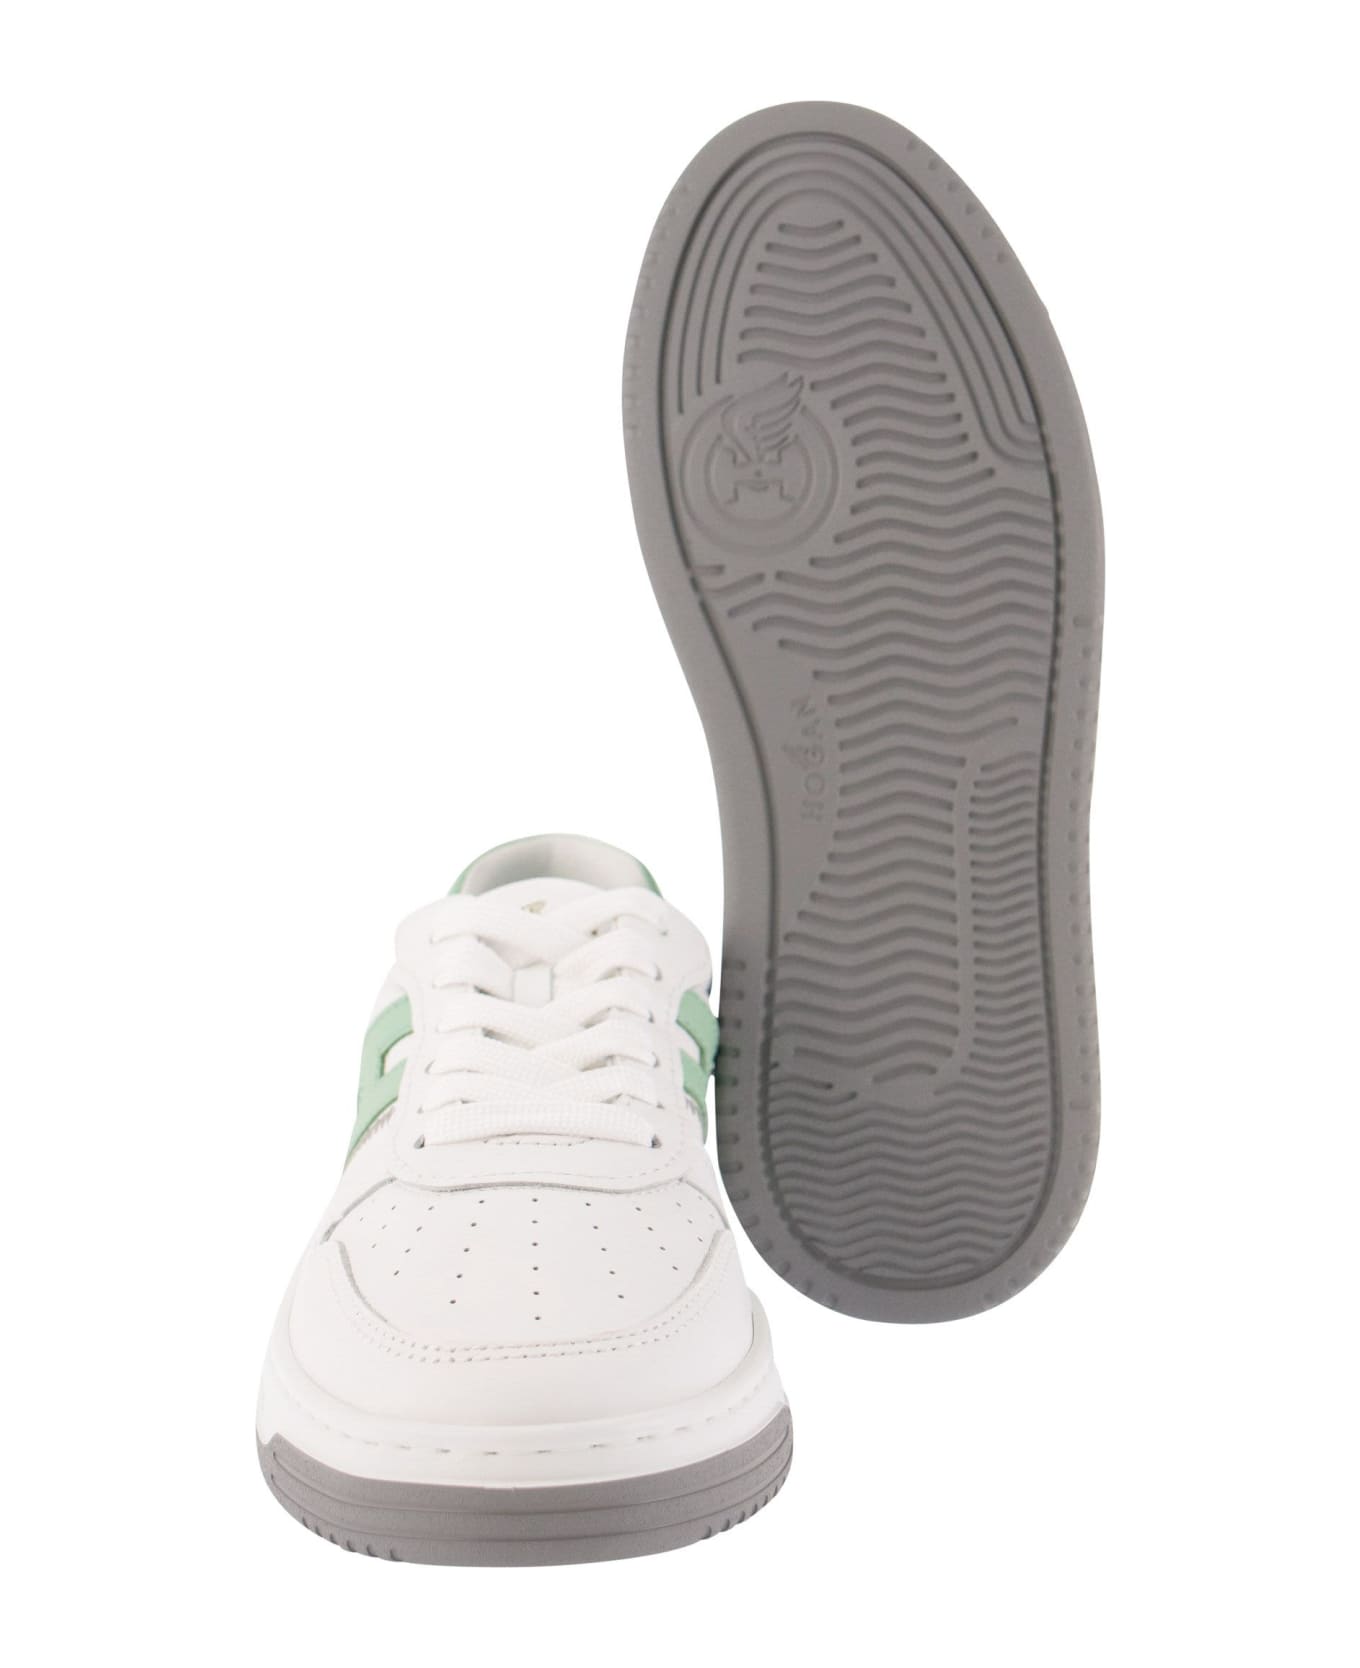 Hogan Sneakers H630 - White/green